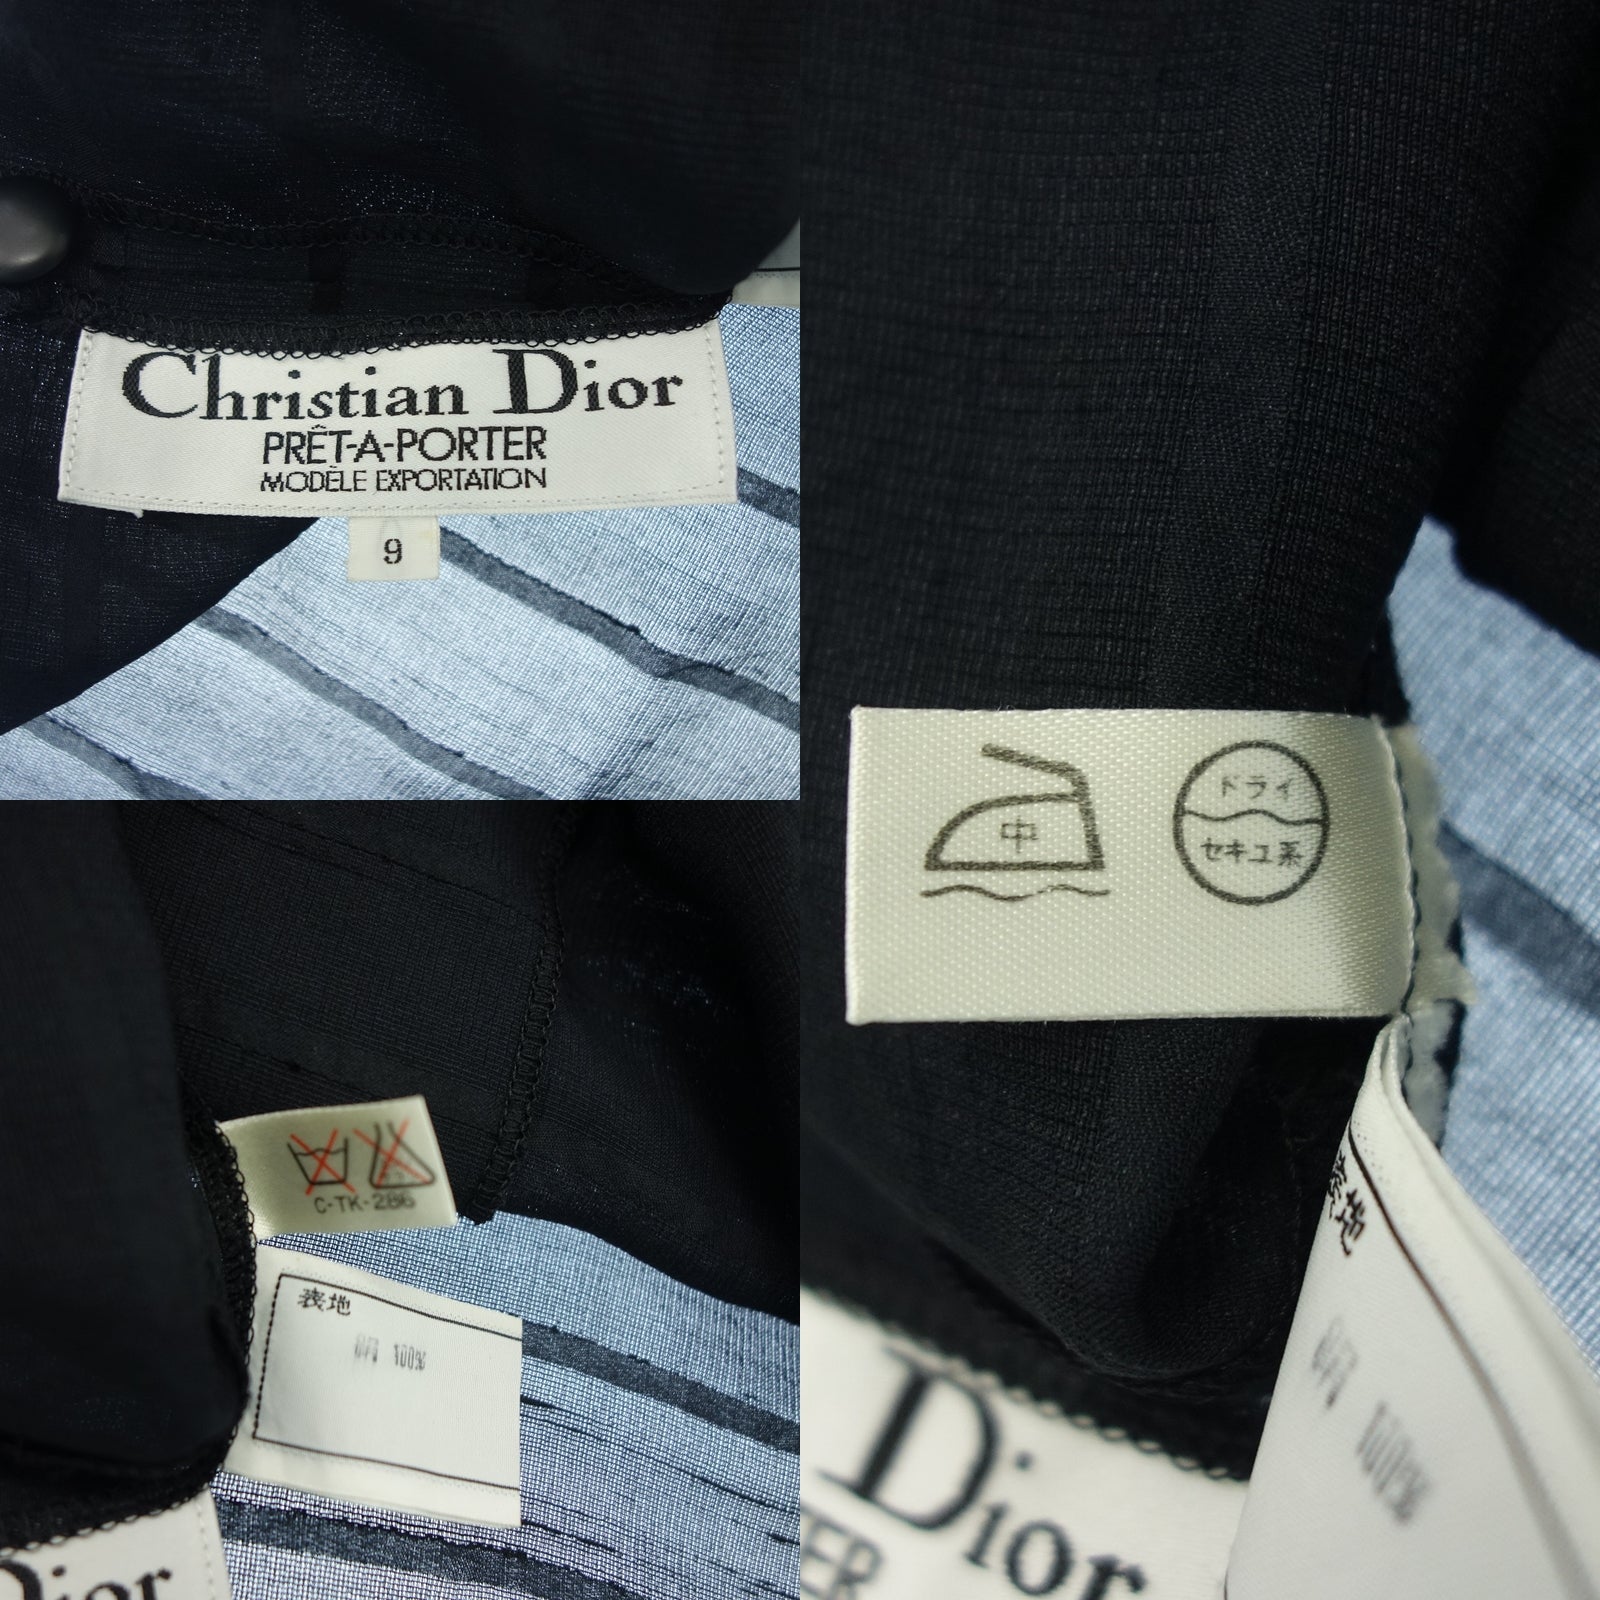 Christian Dior  pret a porter トップス